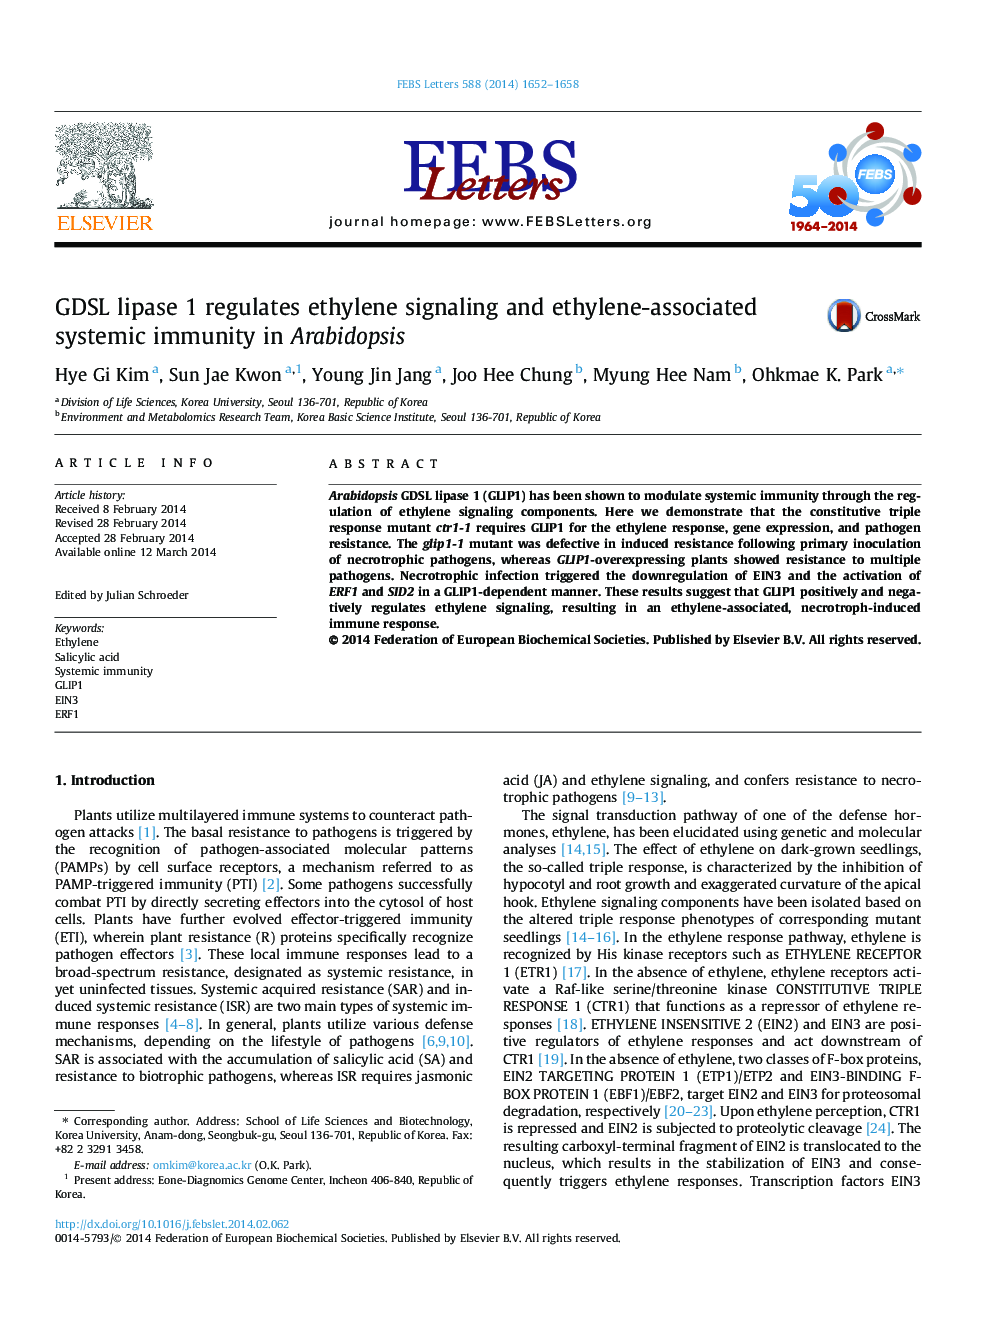 GDSL lipase 1 regulates ethylene signaling and ethylene-associated systemic immunity in Arabidopsis